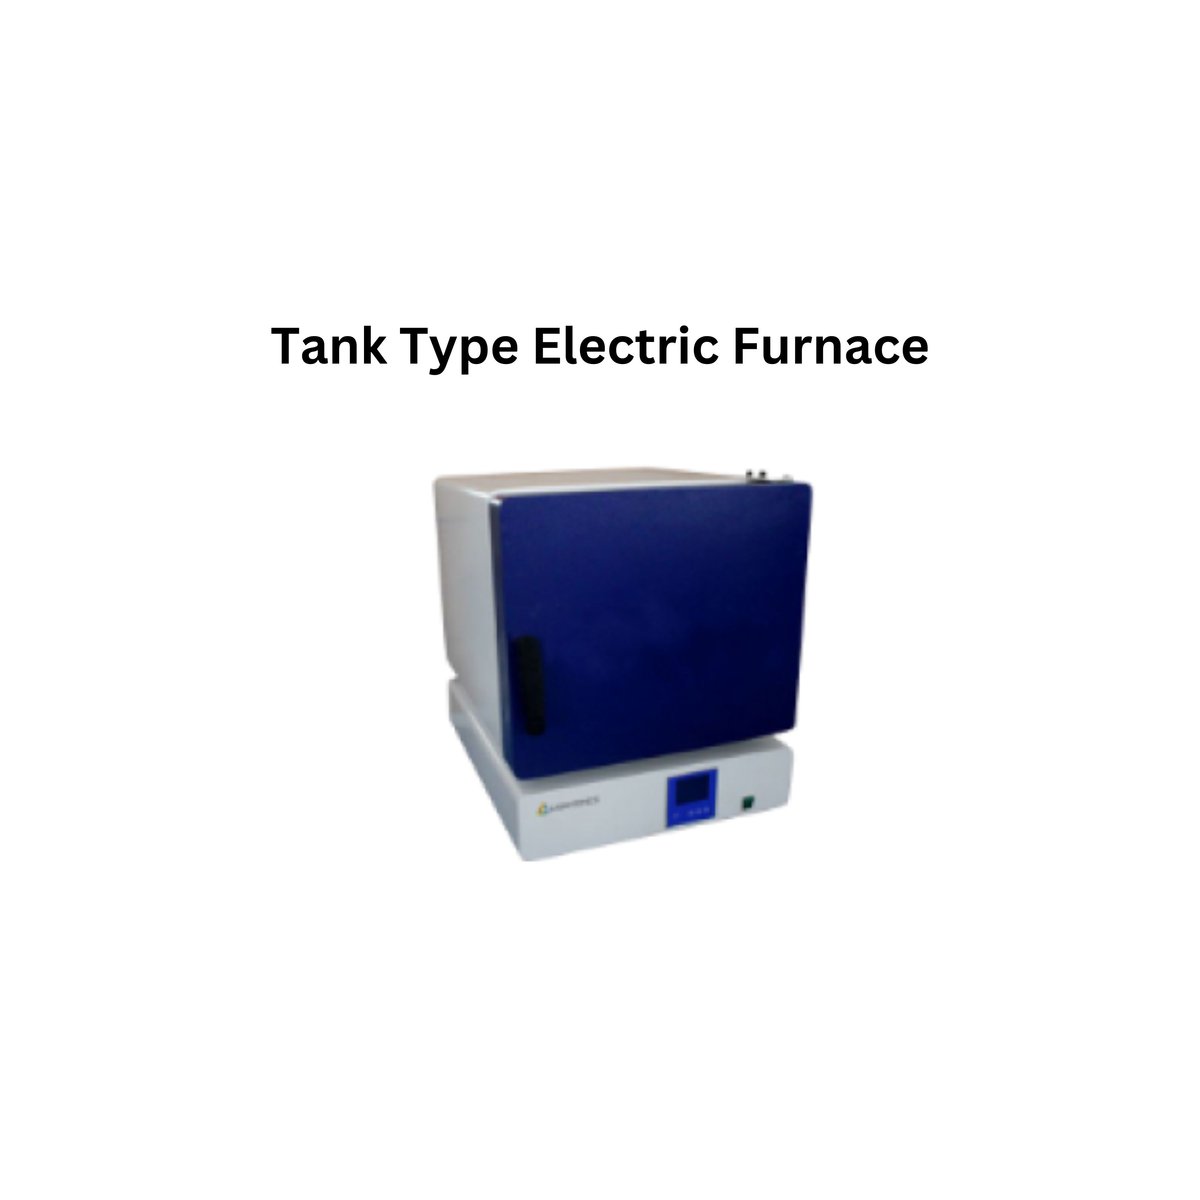 Tank Type Electric Furnace.jpg